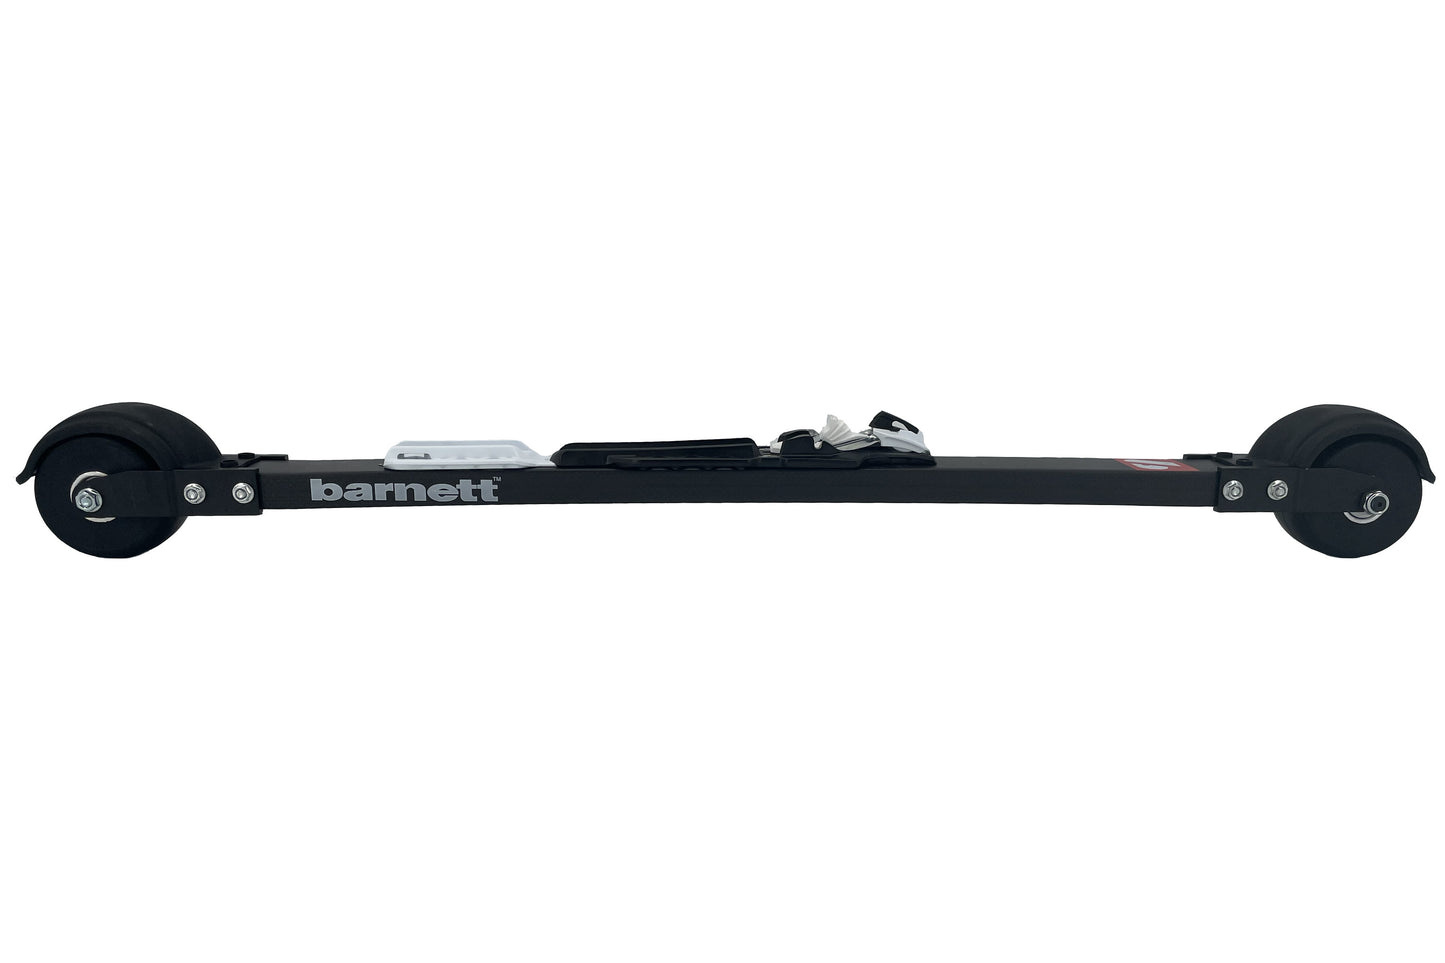 RCE-700 Binding NNN Roller ski, BLACK